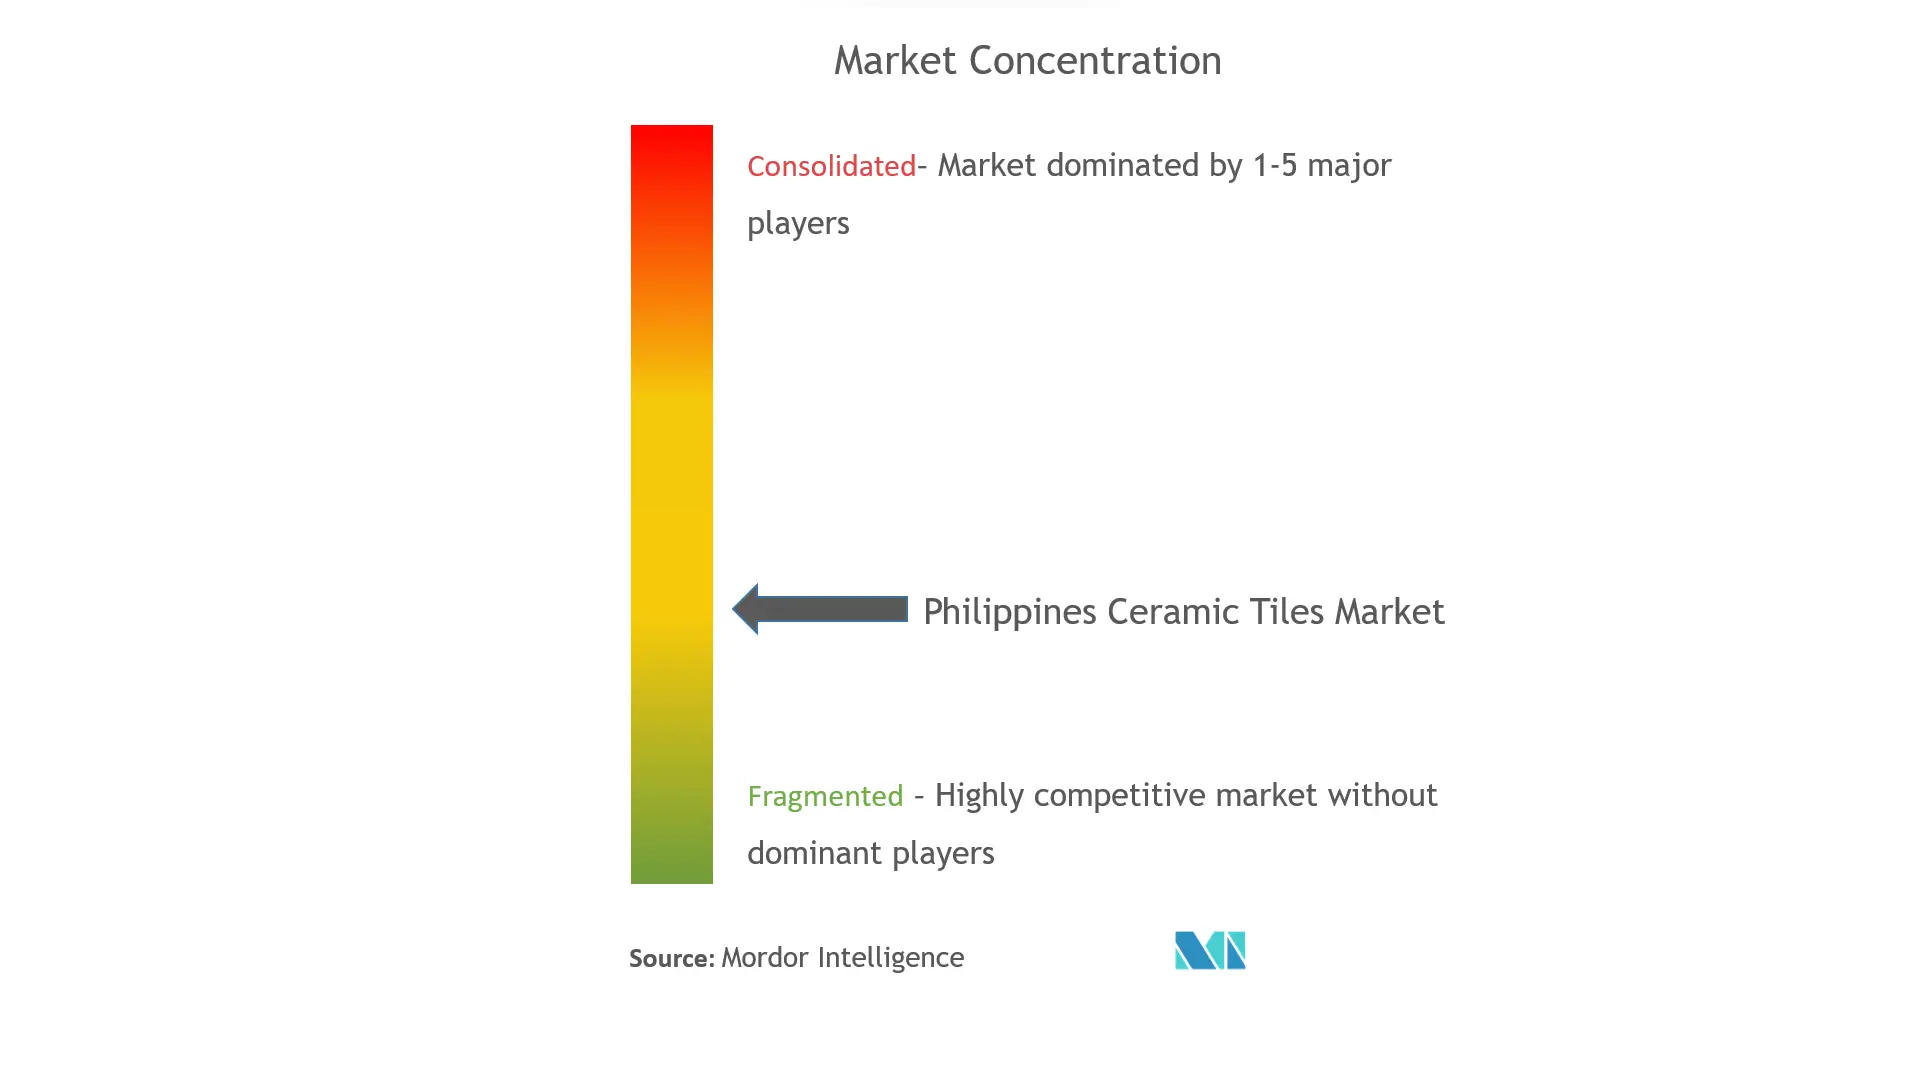 Philippines Ceramic Tiles Market Concentration